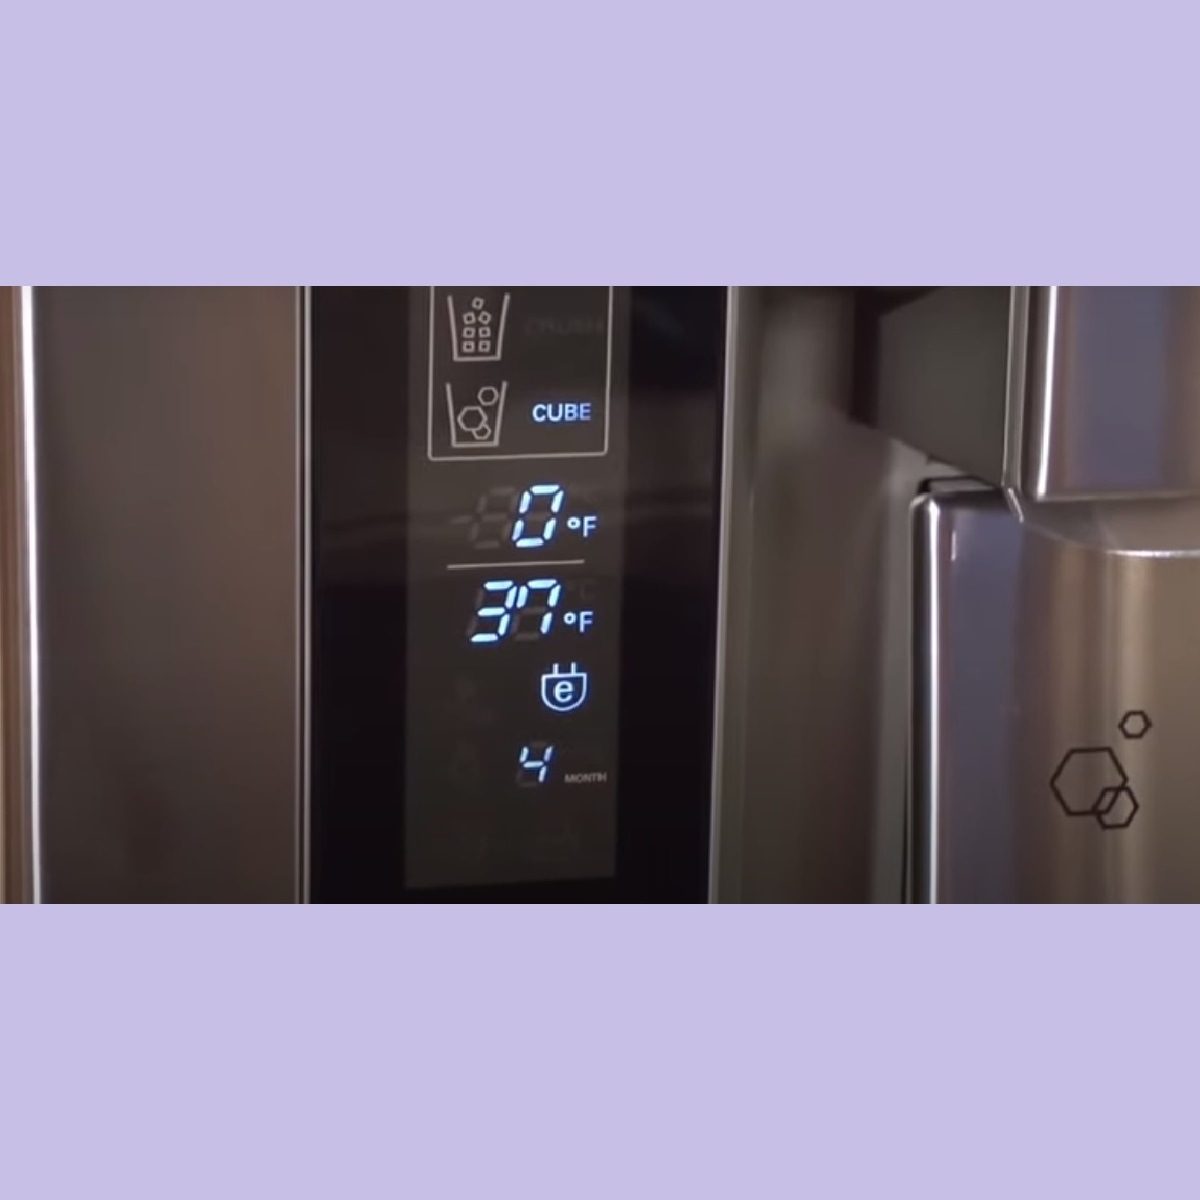 How to reset LG refrigerator temperature